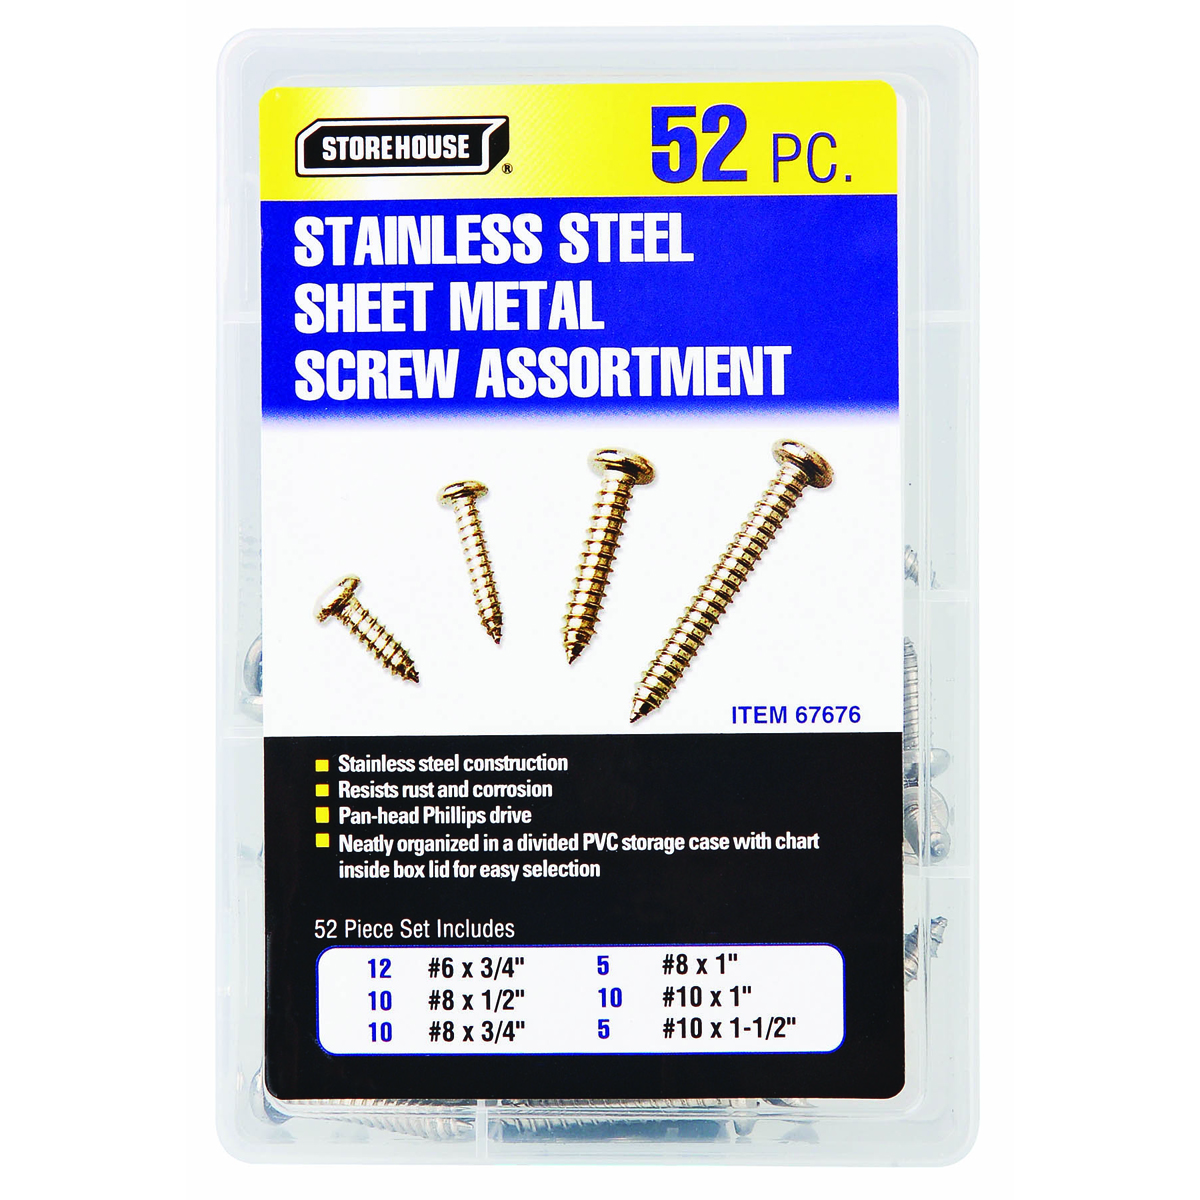 STOREHOUSE 52 Piece Stainless Steel Sheet Metal Screw Assortment - Item 67676